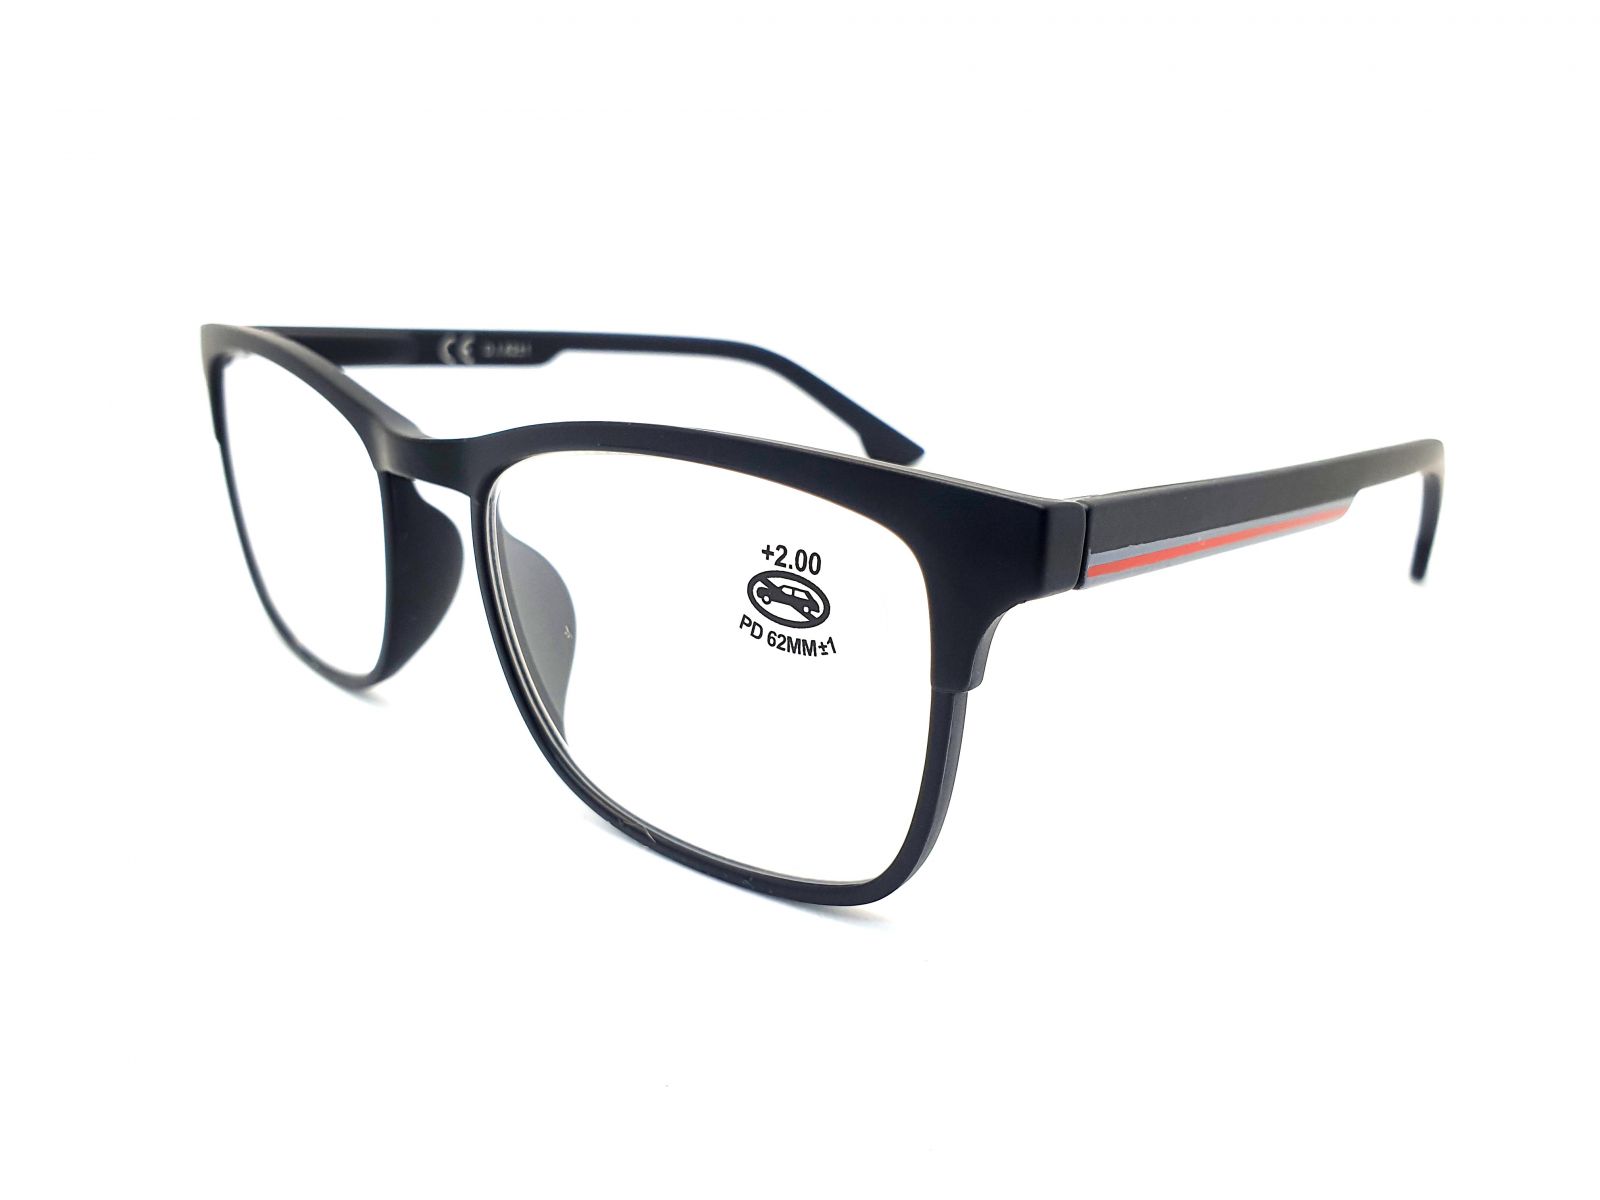 Dioptrické brýle SV2050/ +1,50 s flexem